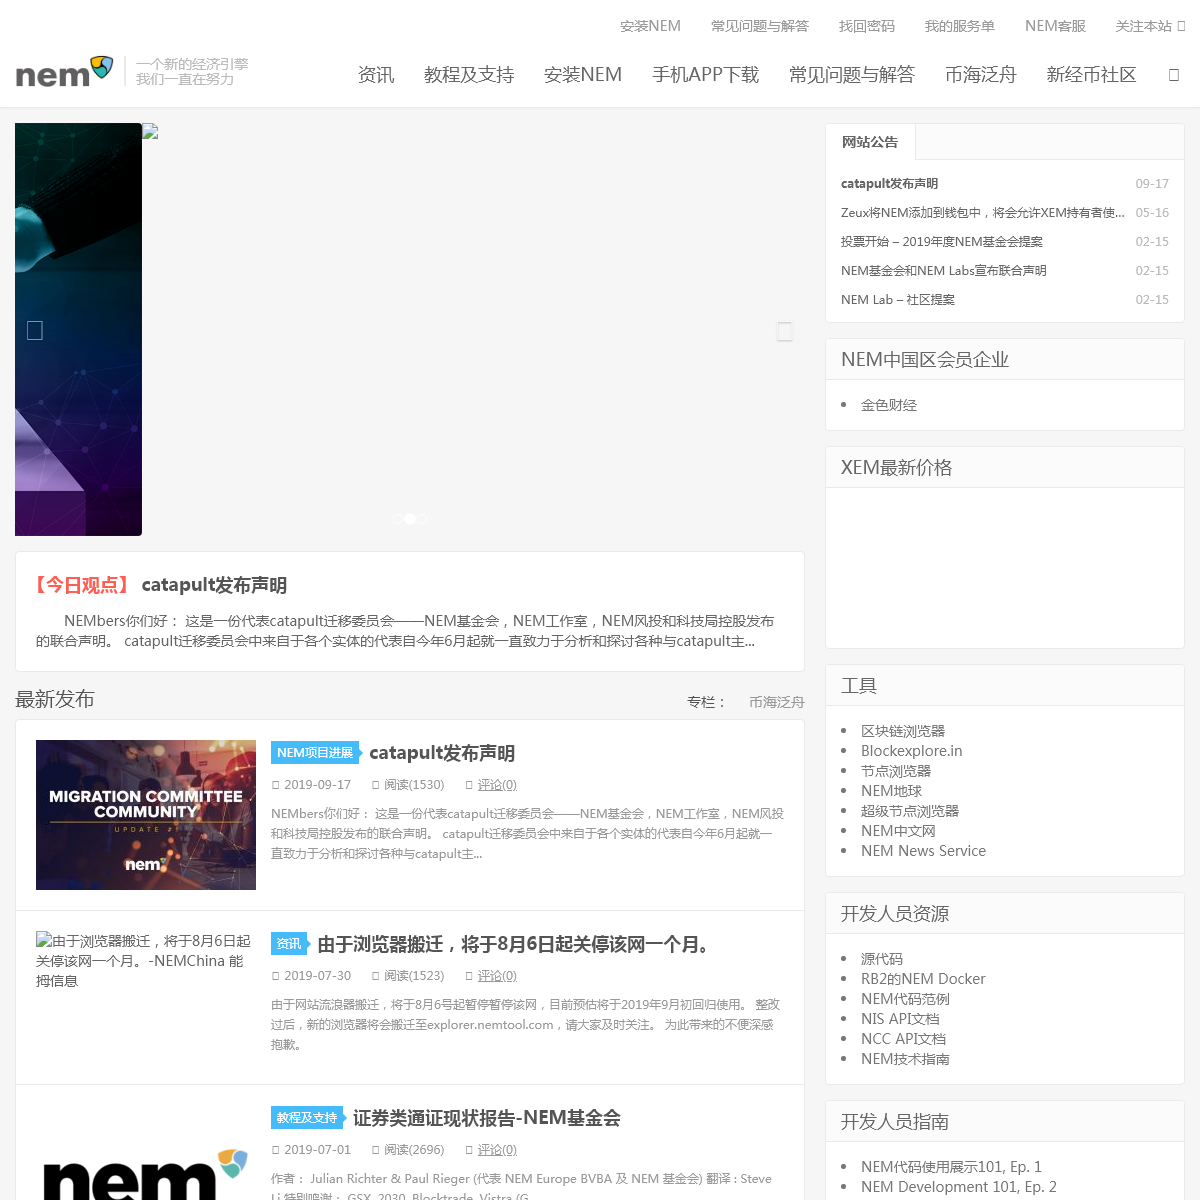 A complete backup of nemchina.com